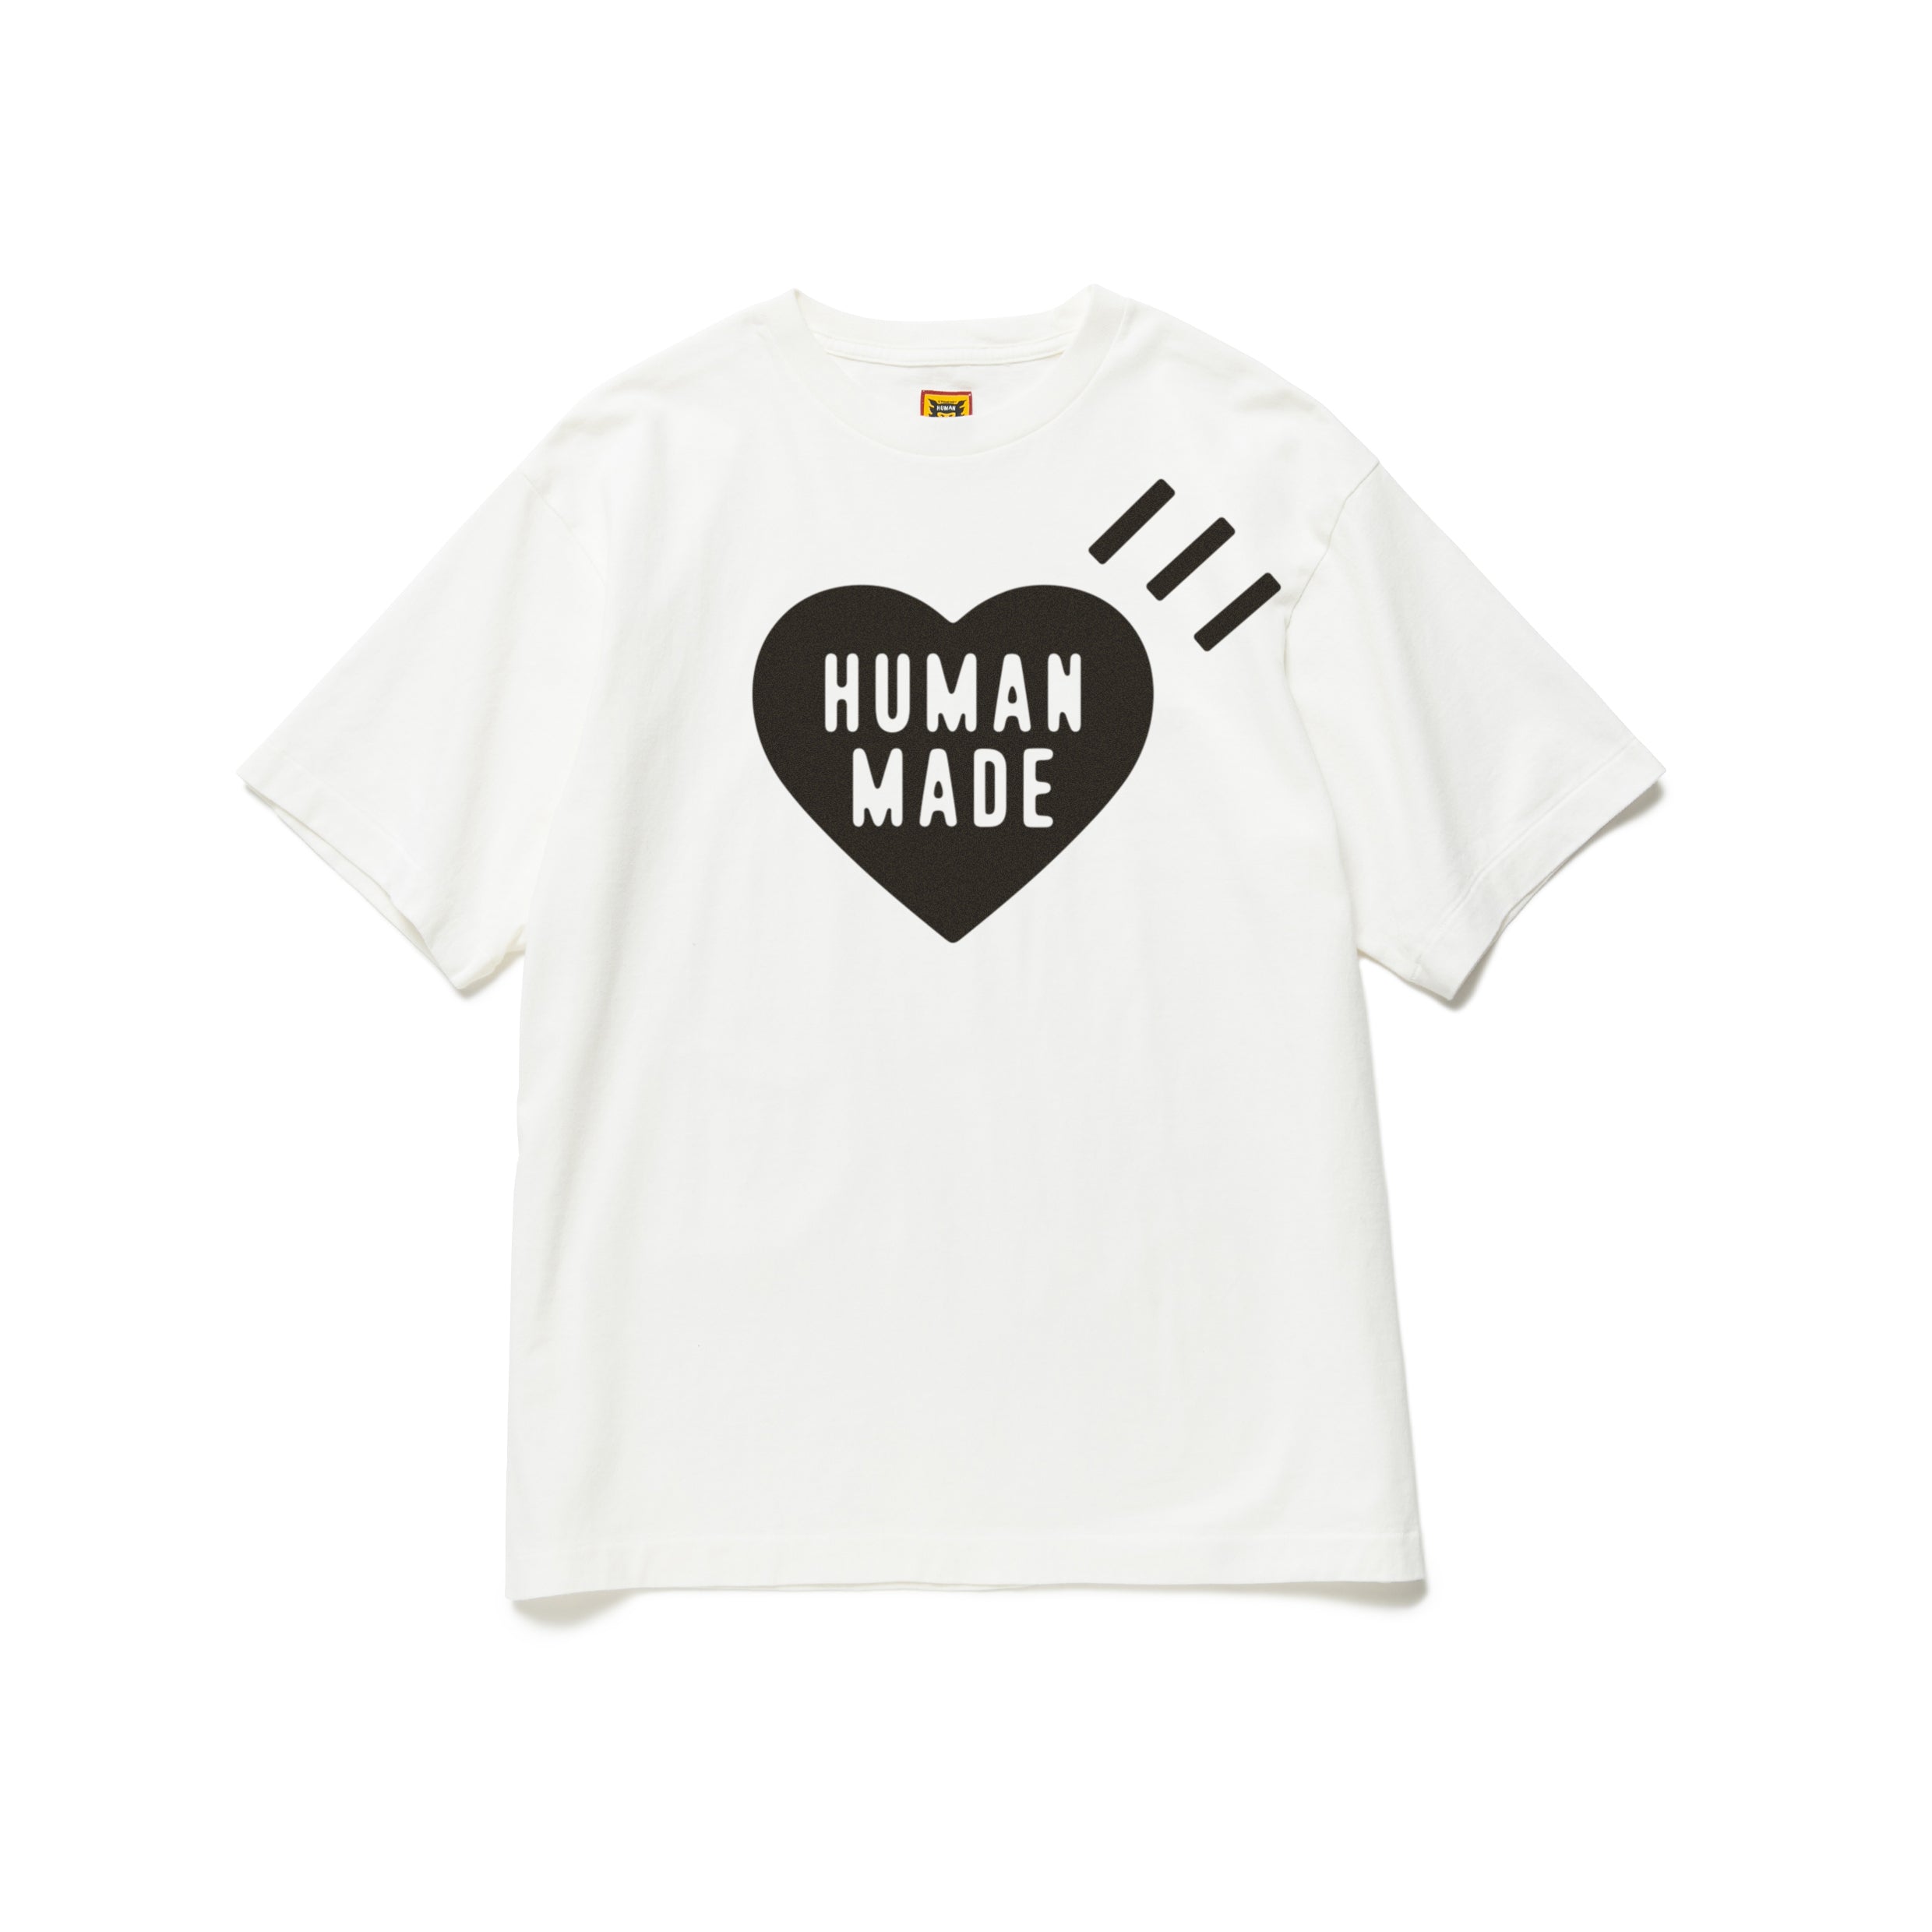 HUMAN MADE POCKET T-SHIRT #1 "White" S